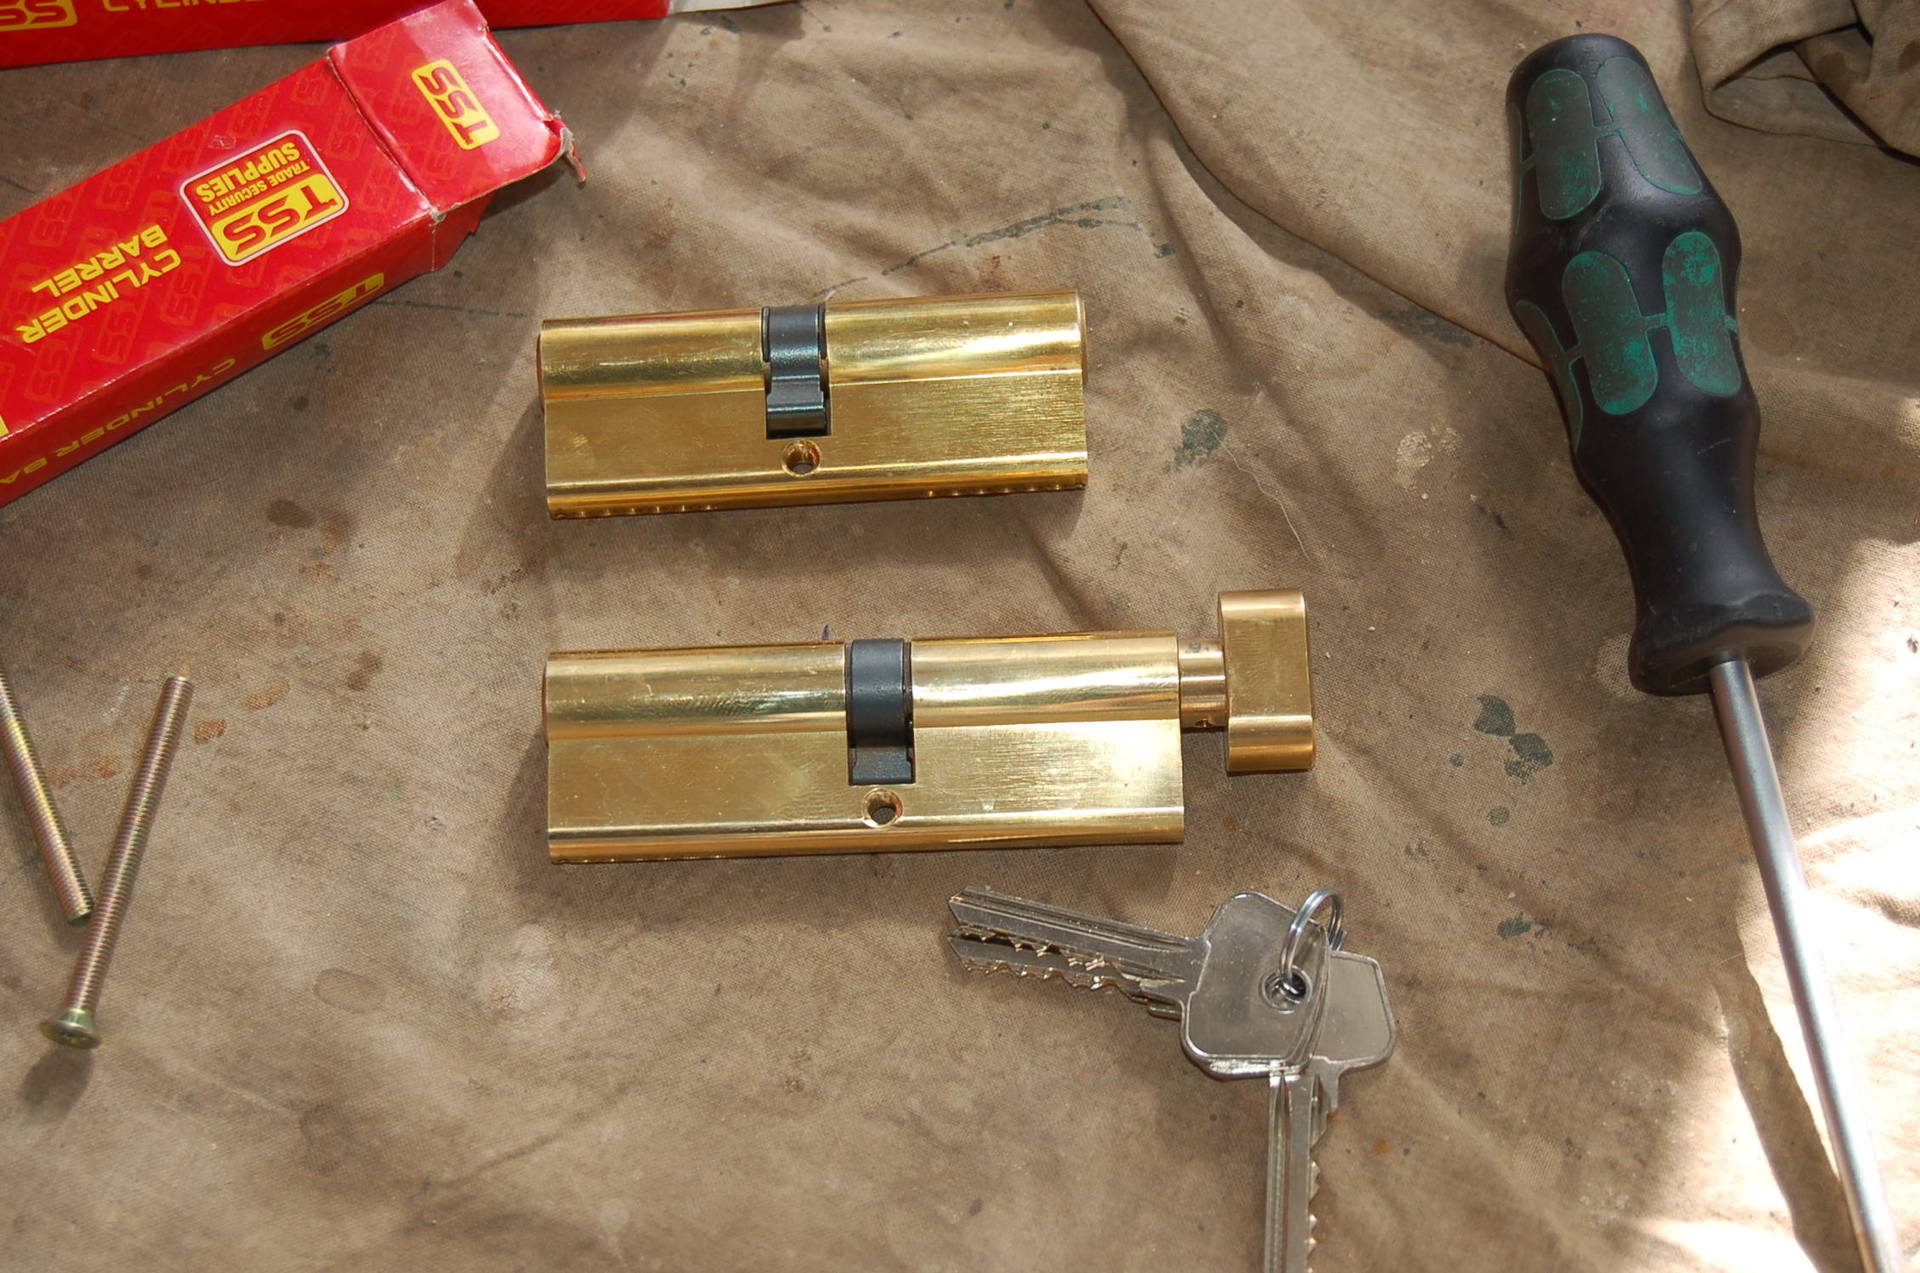 Thumbturn lock cj locksmiths